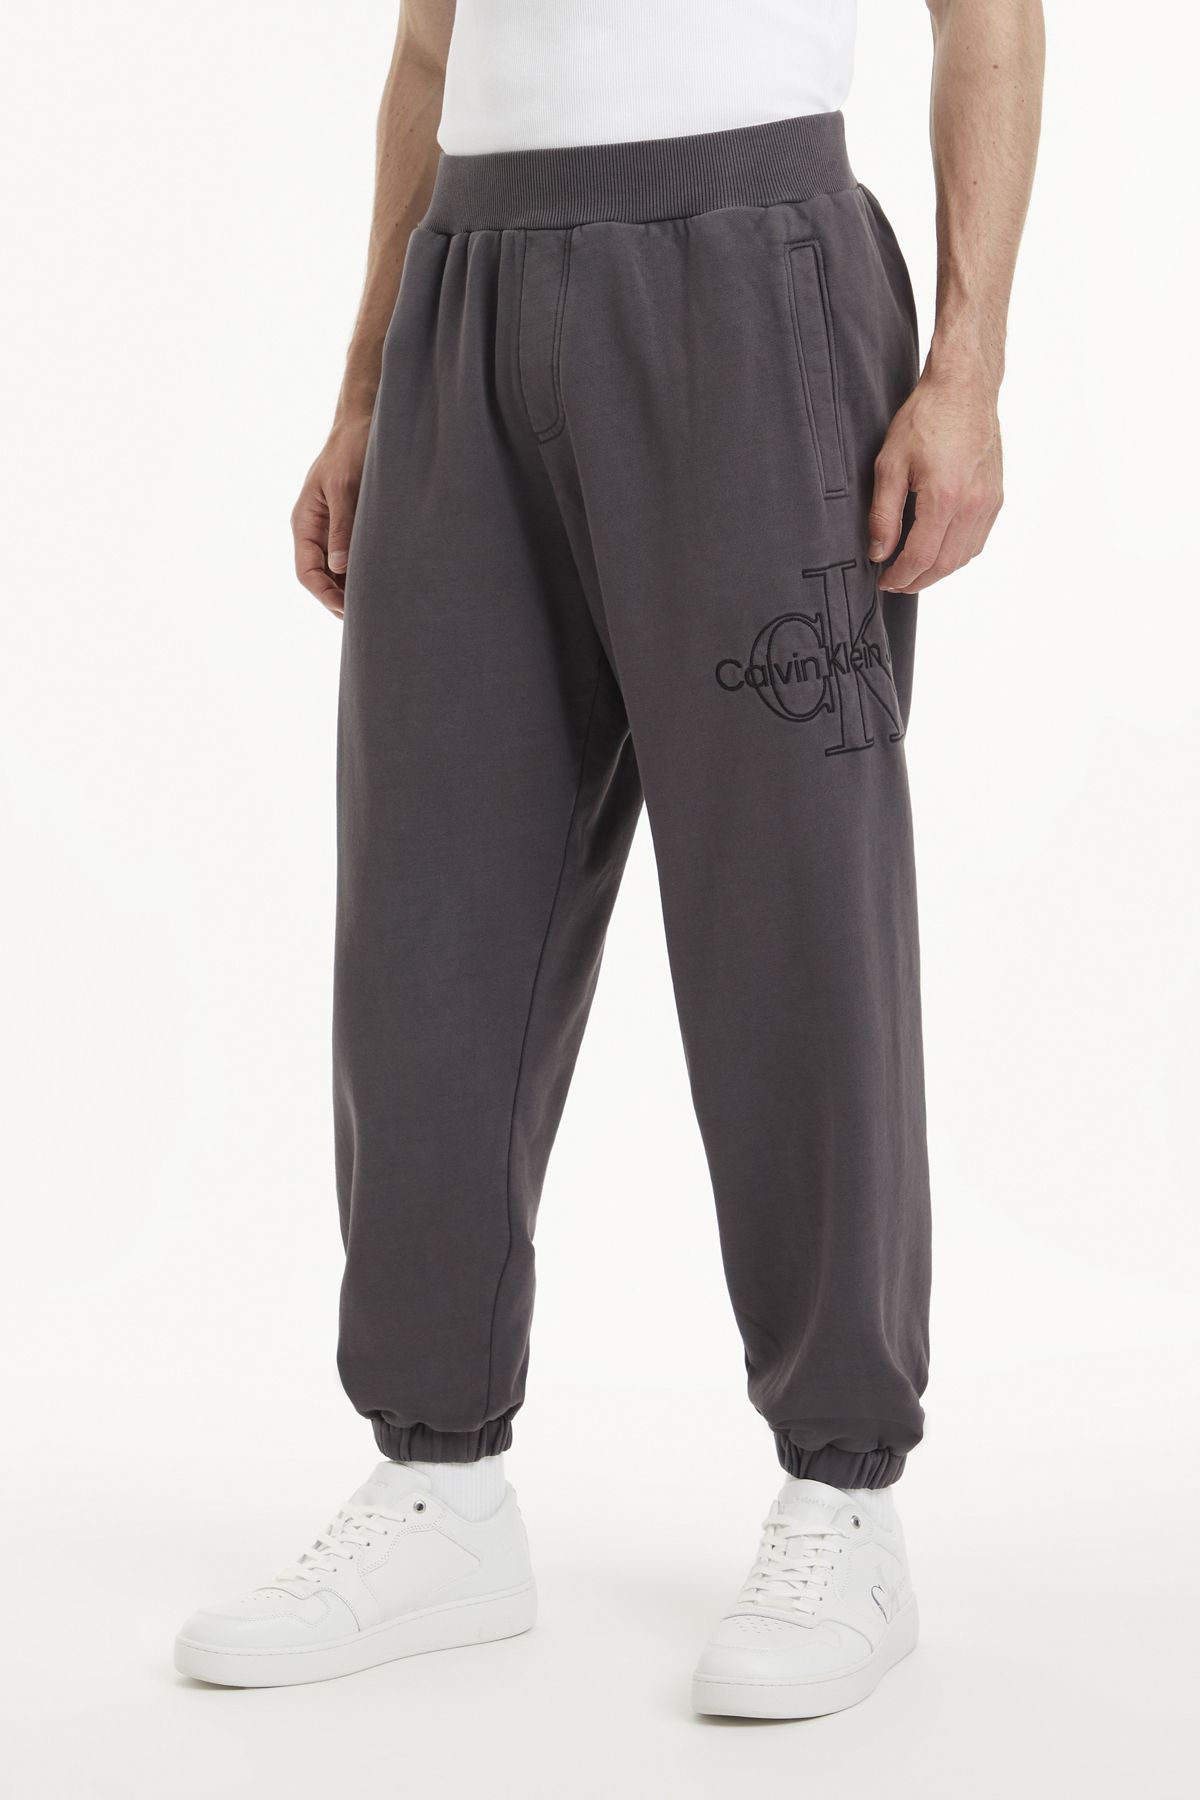 Calvin Klein Sweatpants - Gray - Joggers - Trendyol